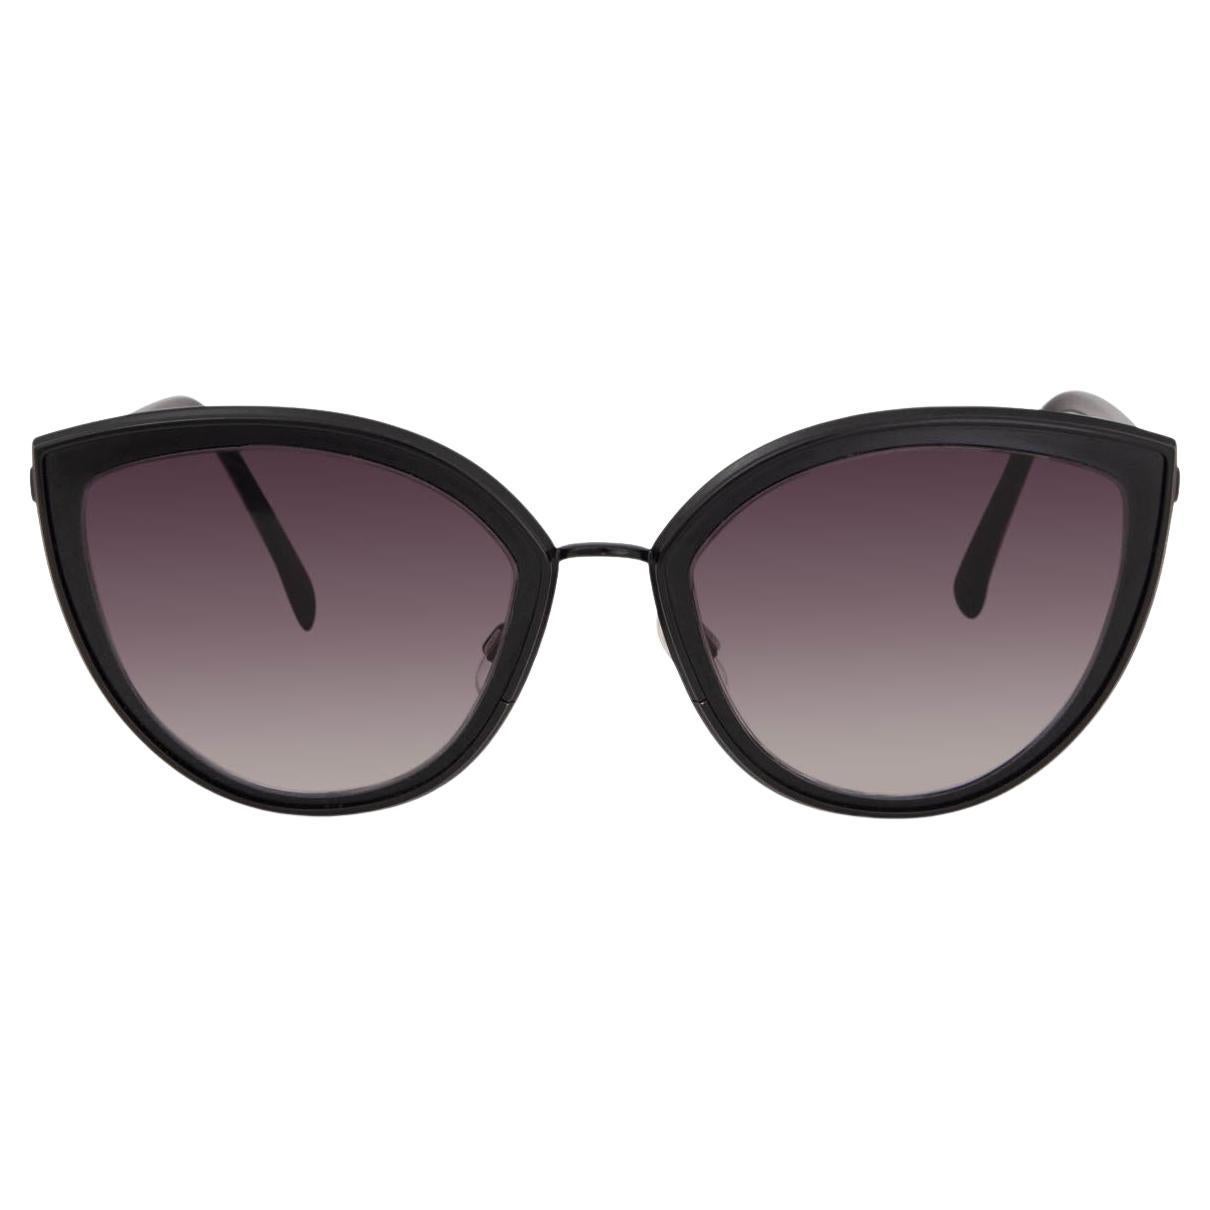 Chanel Cat Eye Sunglasses - 5 For Sale on 1stDibs